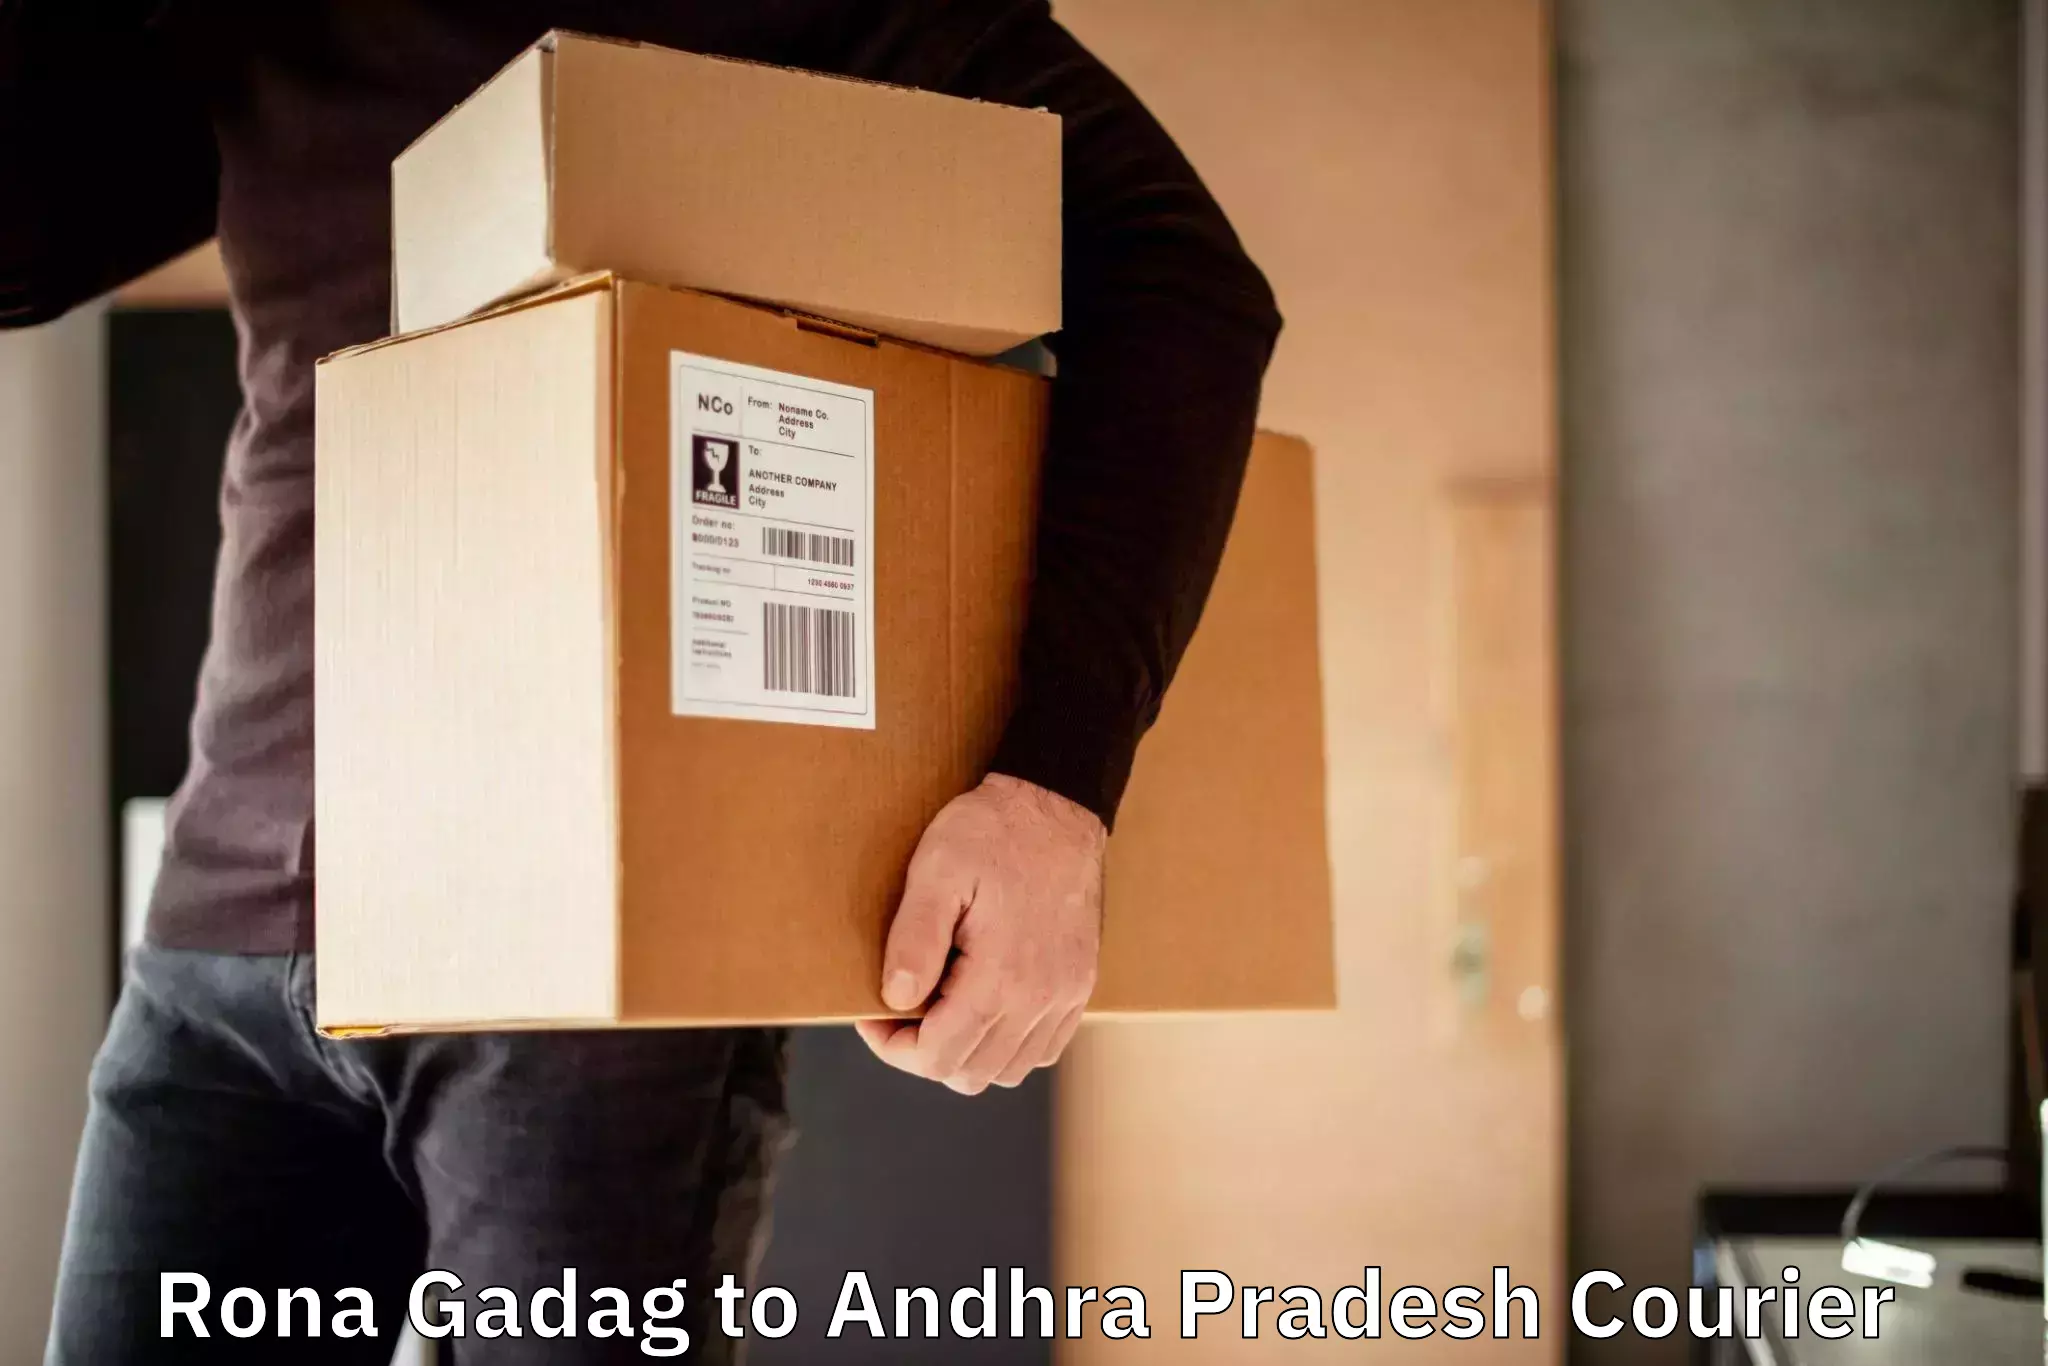 Easy return solutions Rona Gadag to Andhra Pradesh